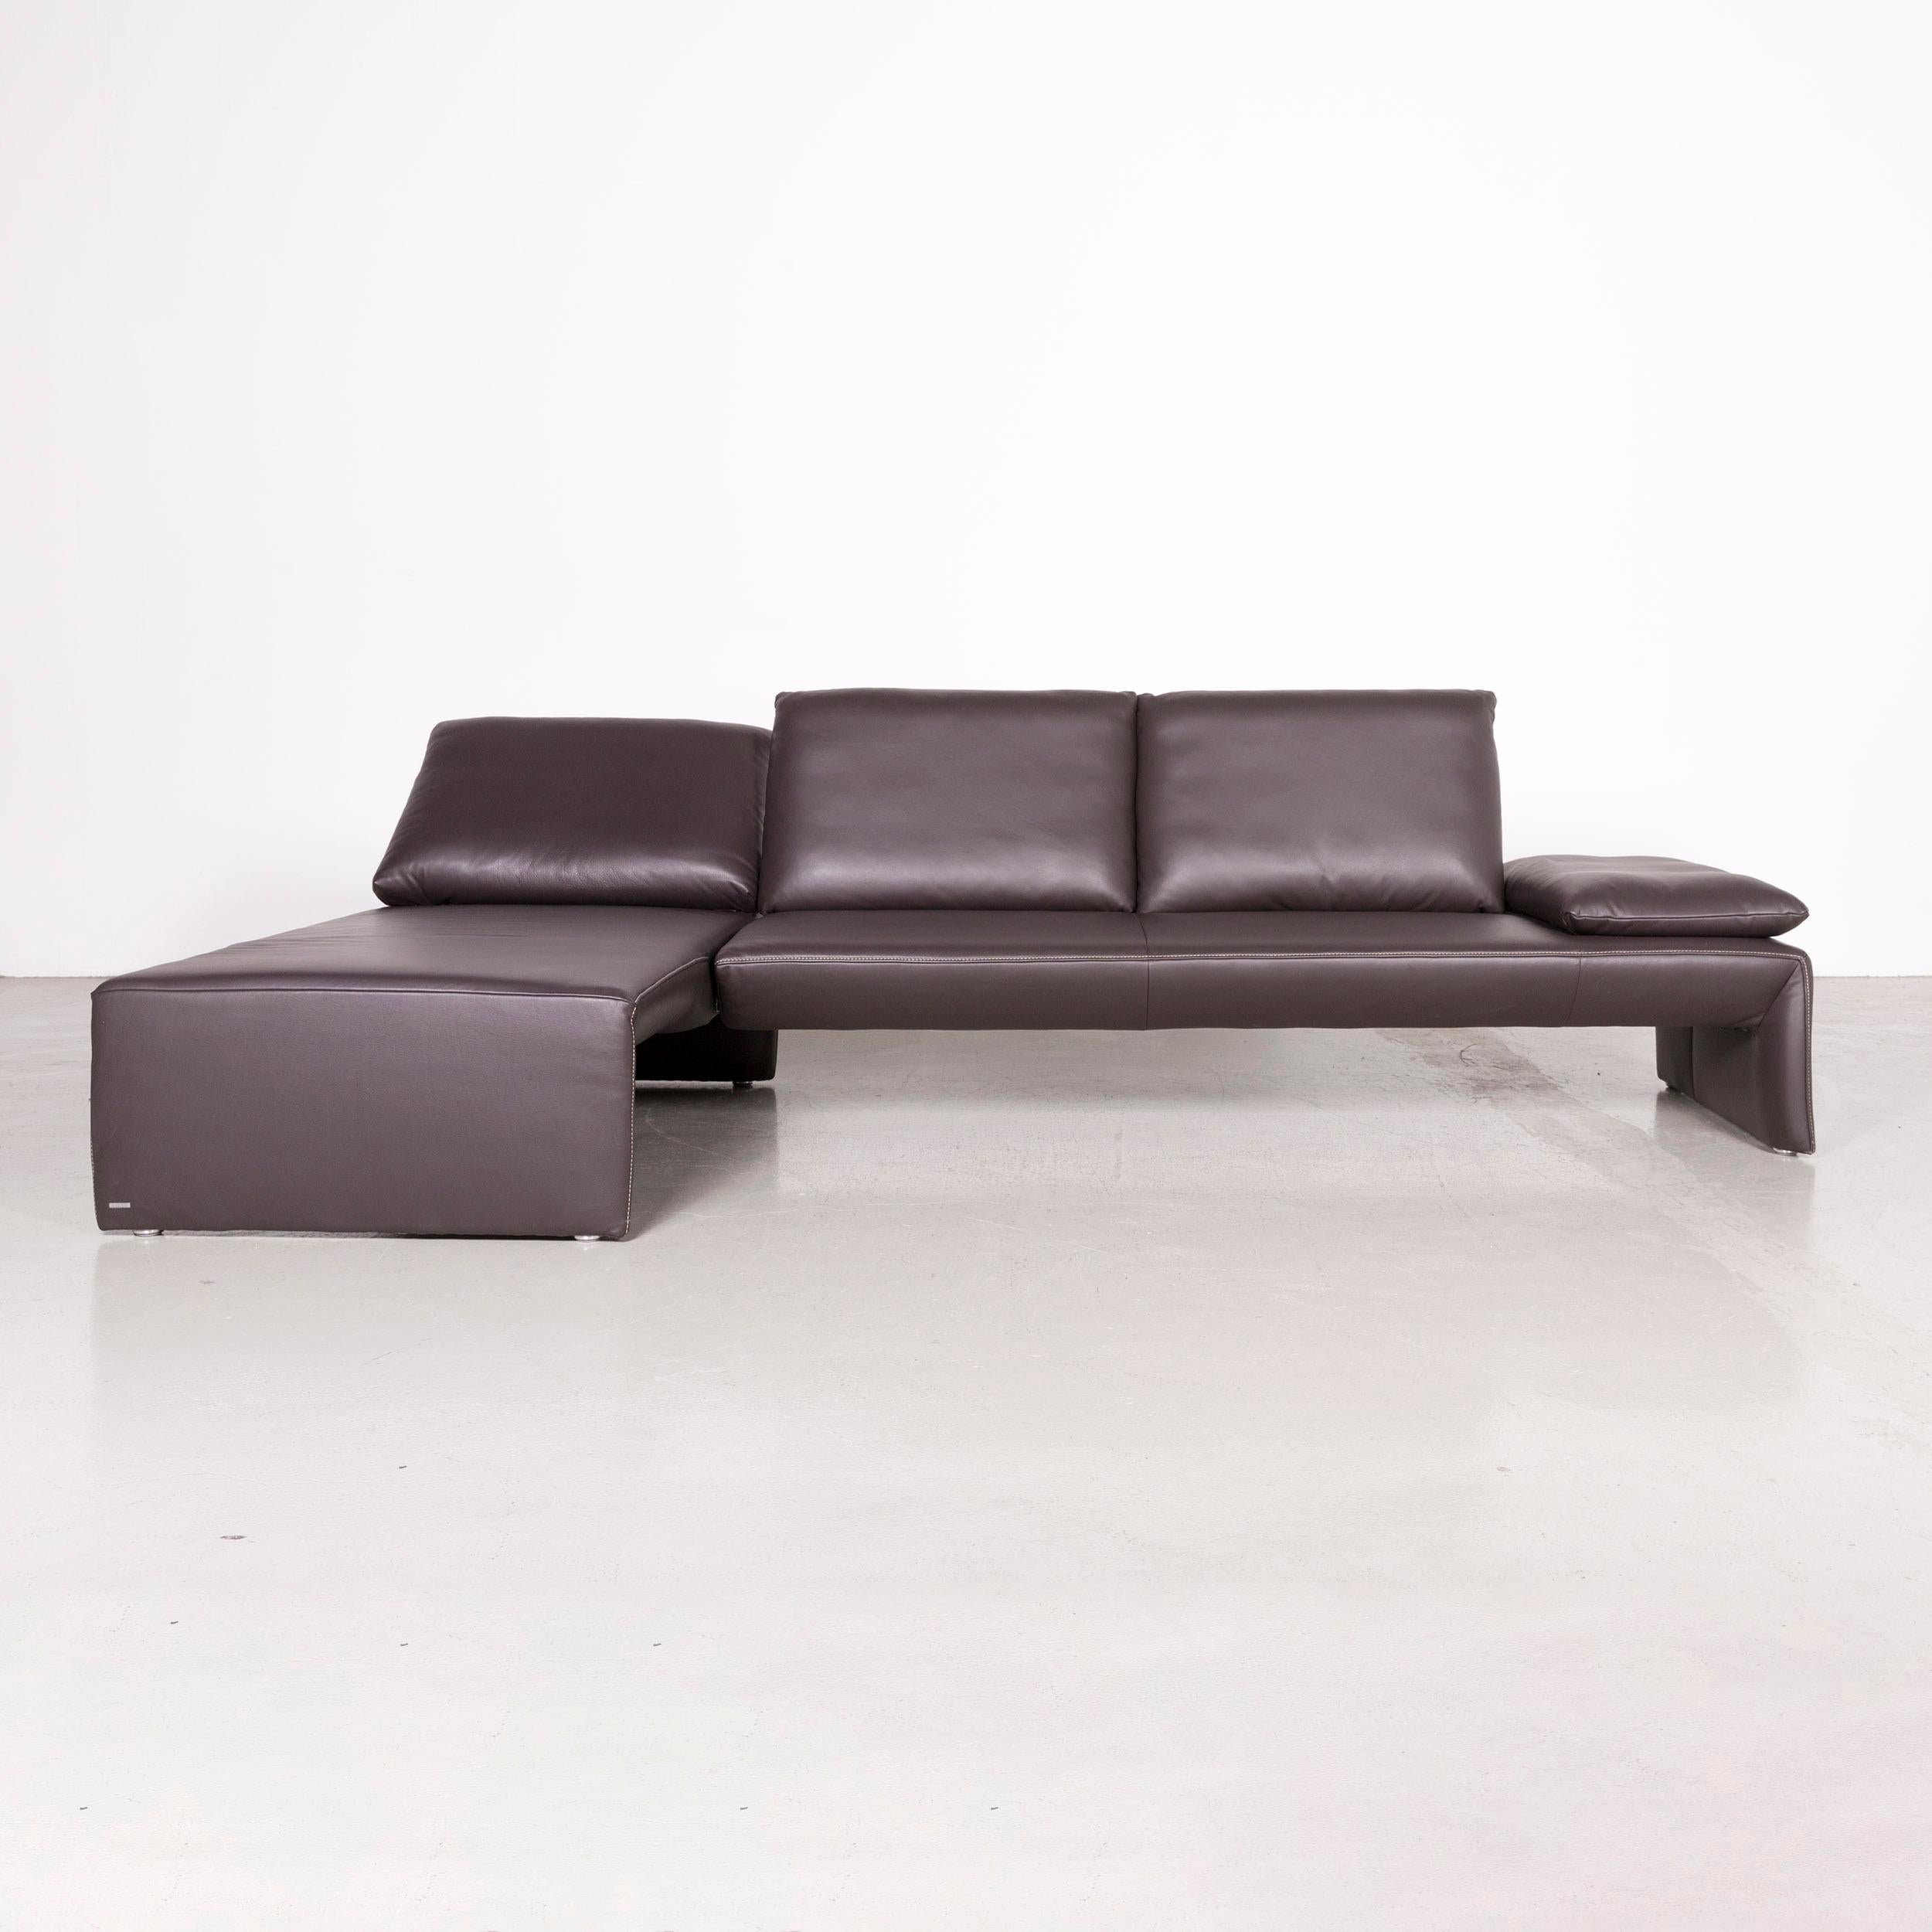 Koinor Rivo Designer Leather Corner Sofa Brown Couch In Good Condition For Sale In Cologne, DE